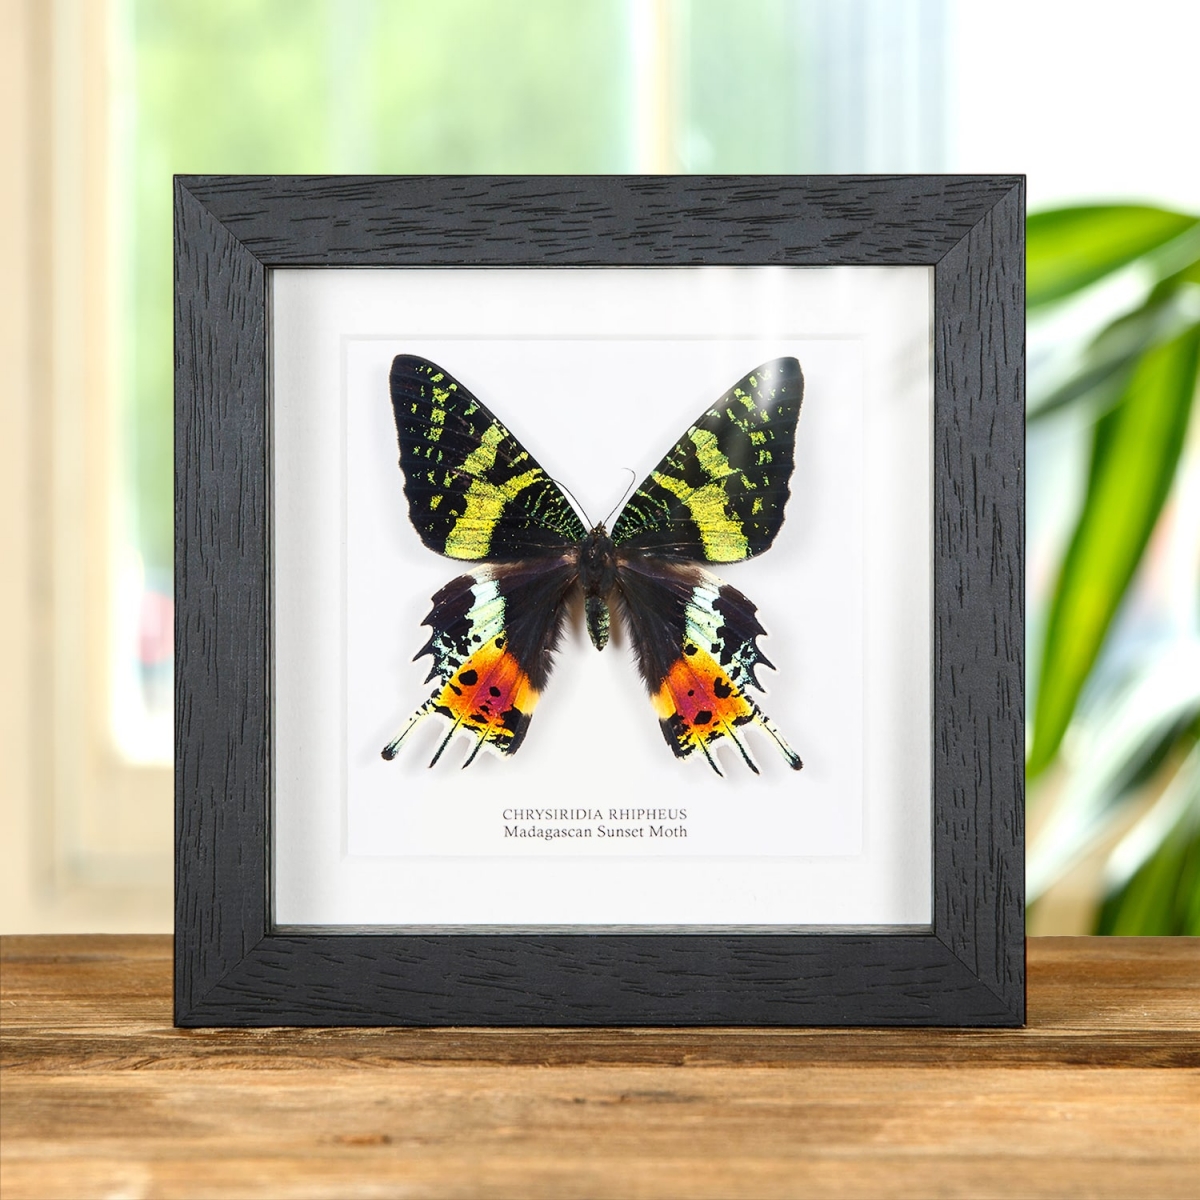 Minibeast Madagascan Sunset Moth in Box Frame (Chrysiridia rhipheus)